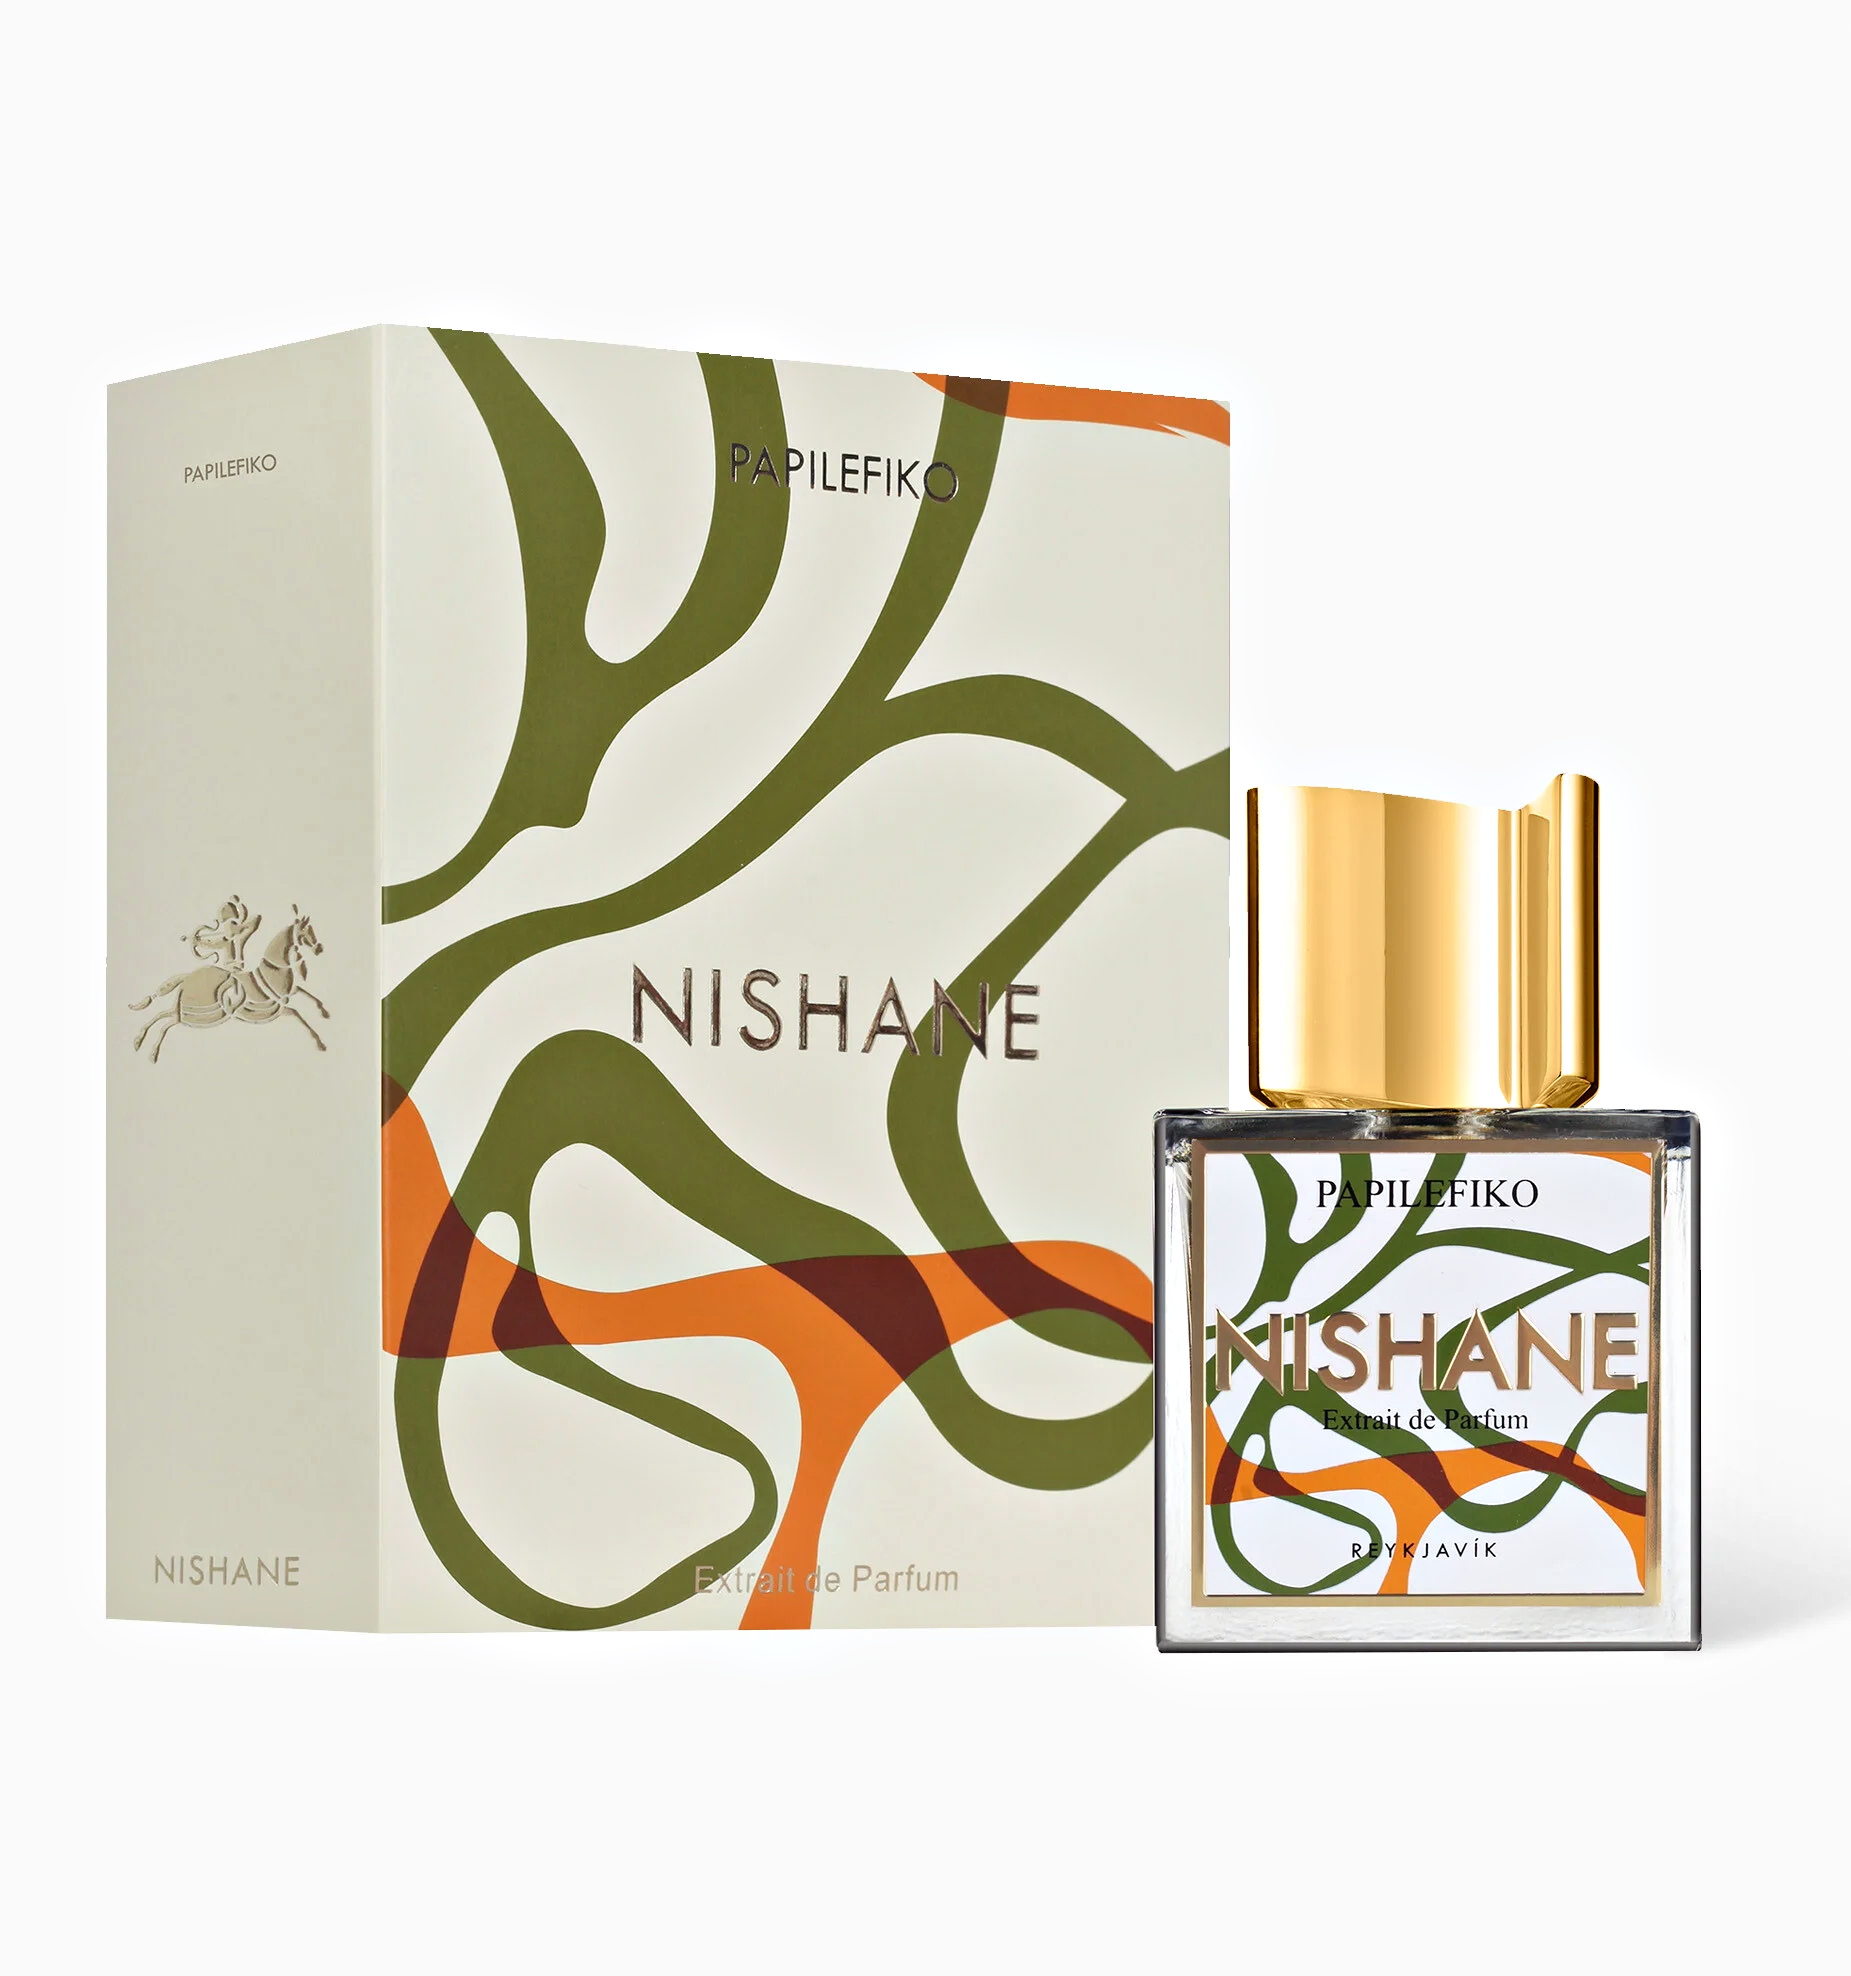 Papilefiko Nishane Extrait de Parfum 50 ml - Tuxedo.no - NisjeParfymer - Oslo Norway